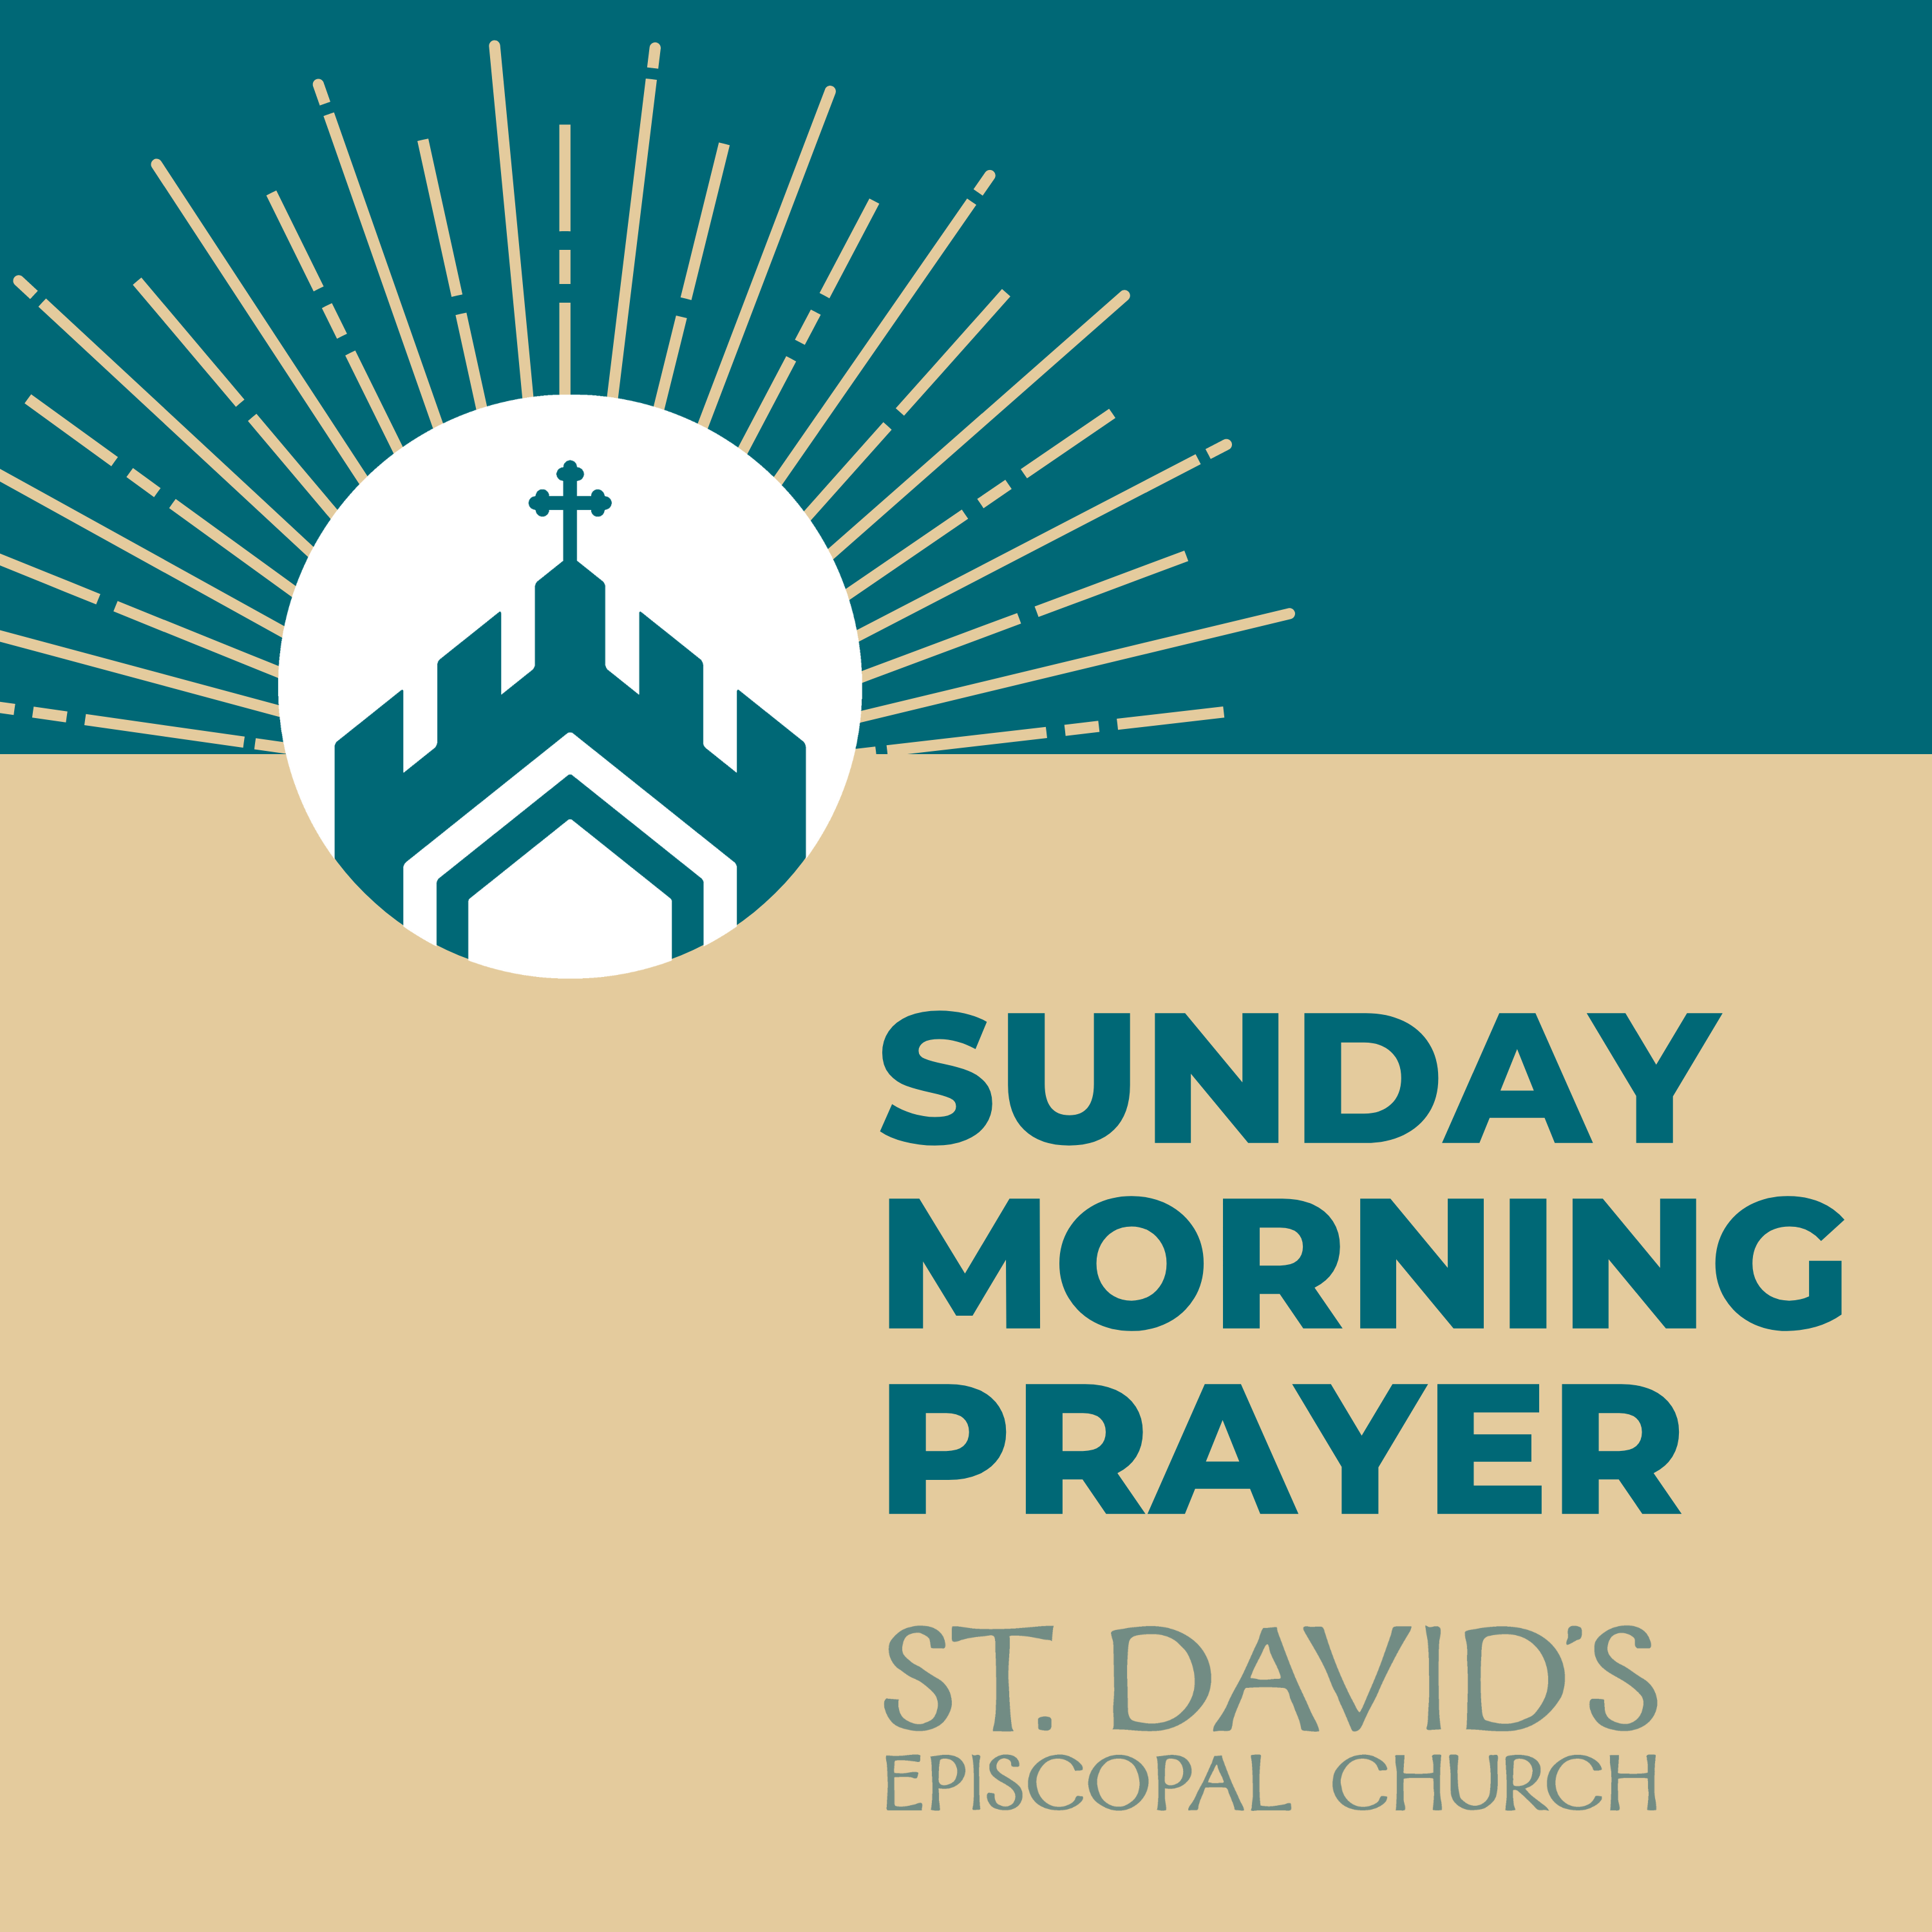 Sunday Morning Prayer: Rite Two, Year 2, 13th Sunday after Pentecost